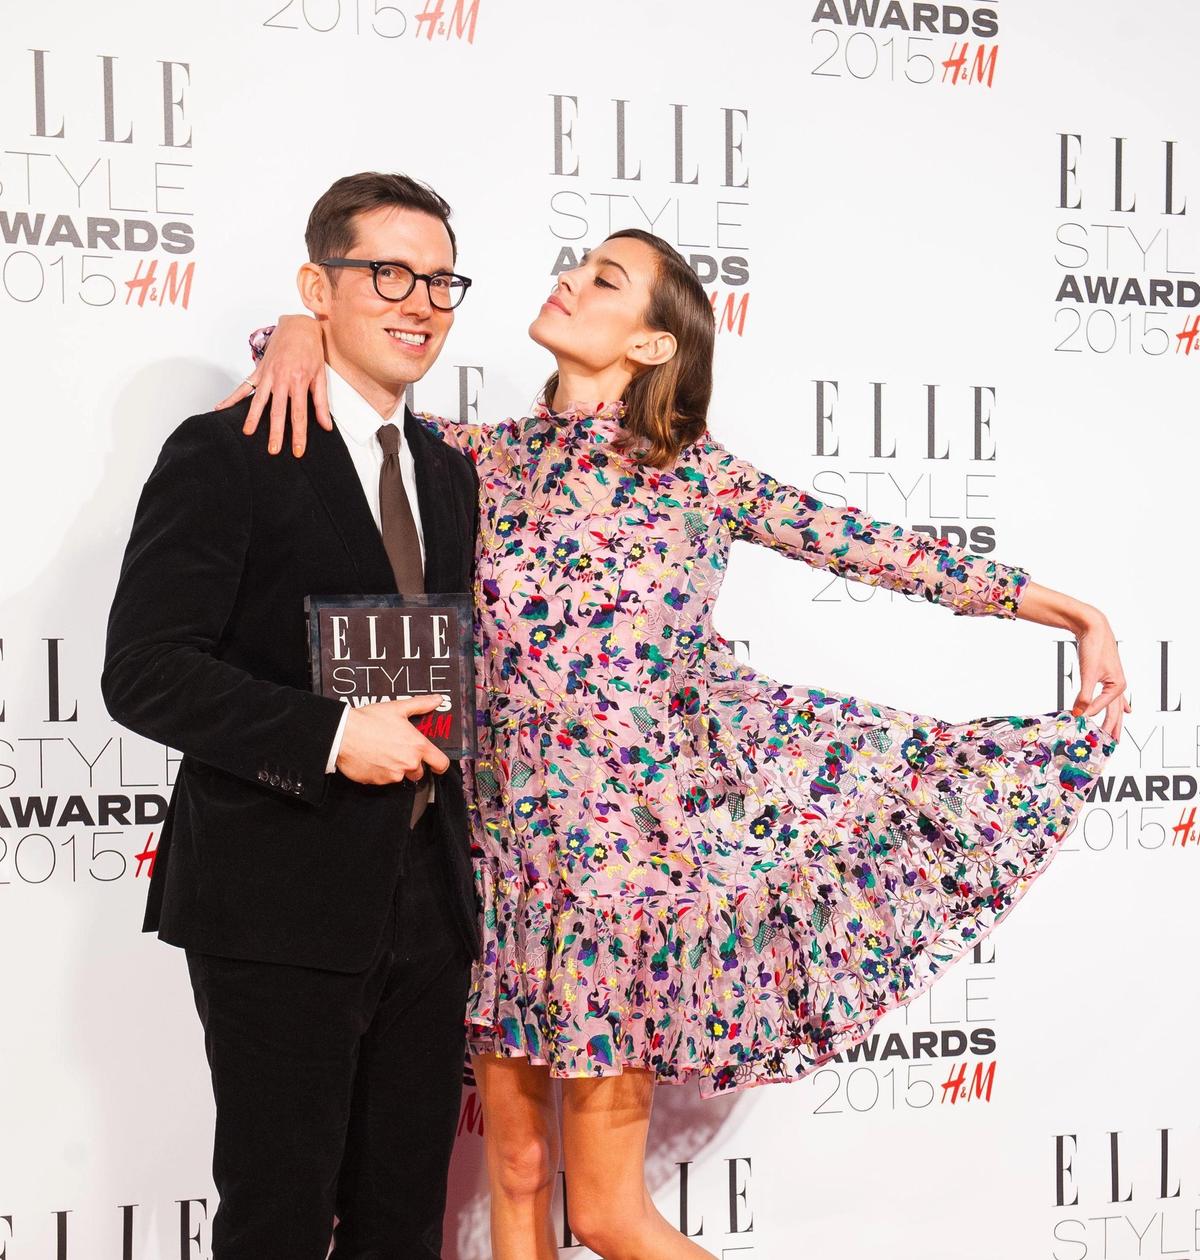 Erdem Moralioglu with award presenter Alexa Chung at the Elle Style Awards 2015

Alamy